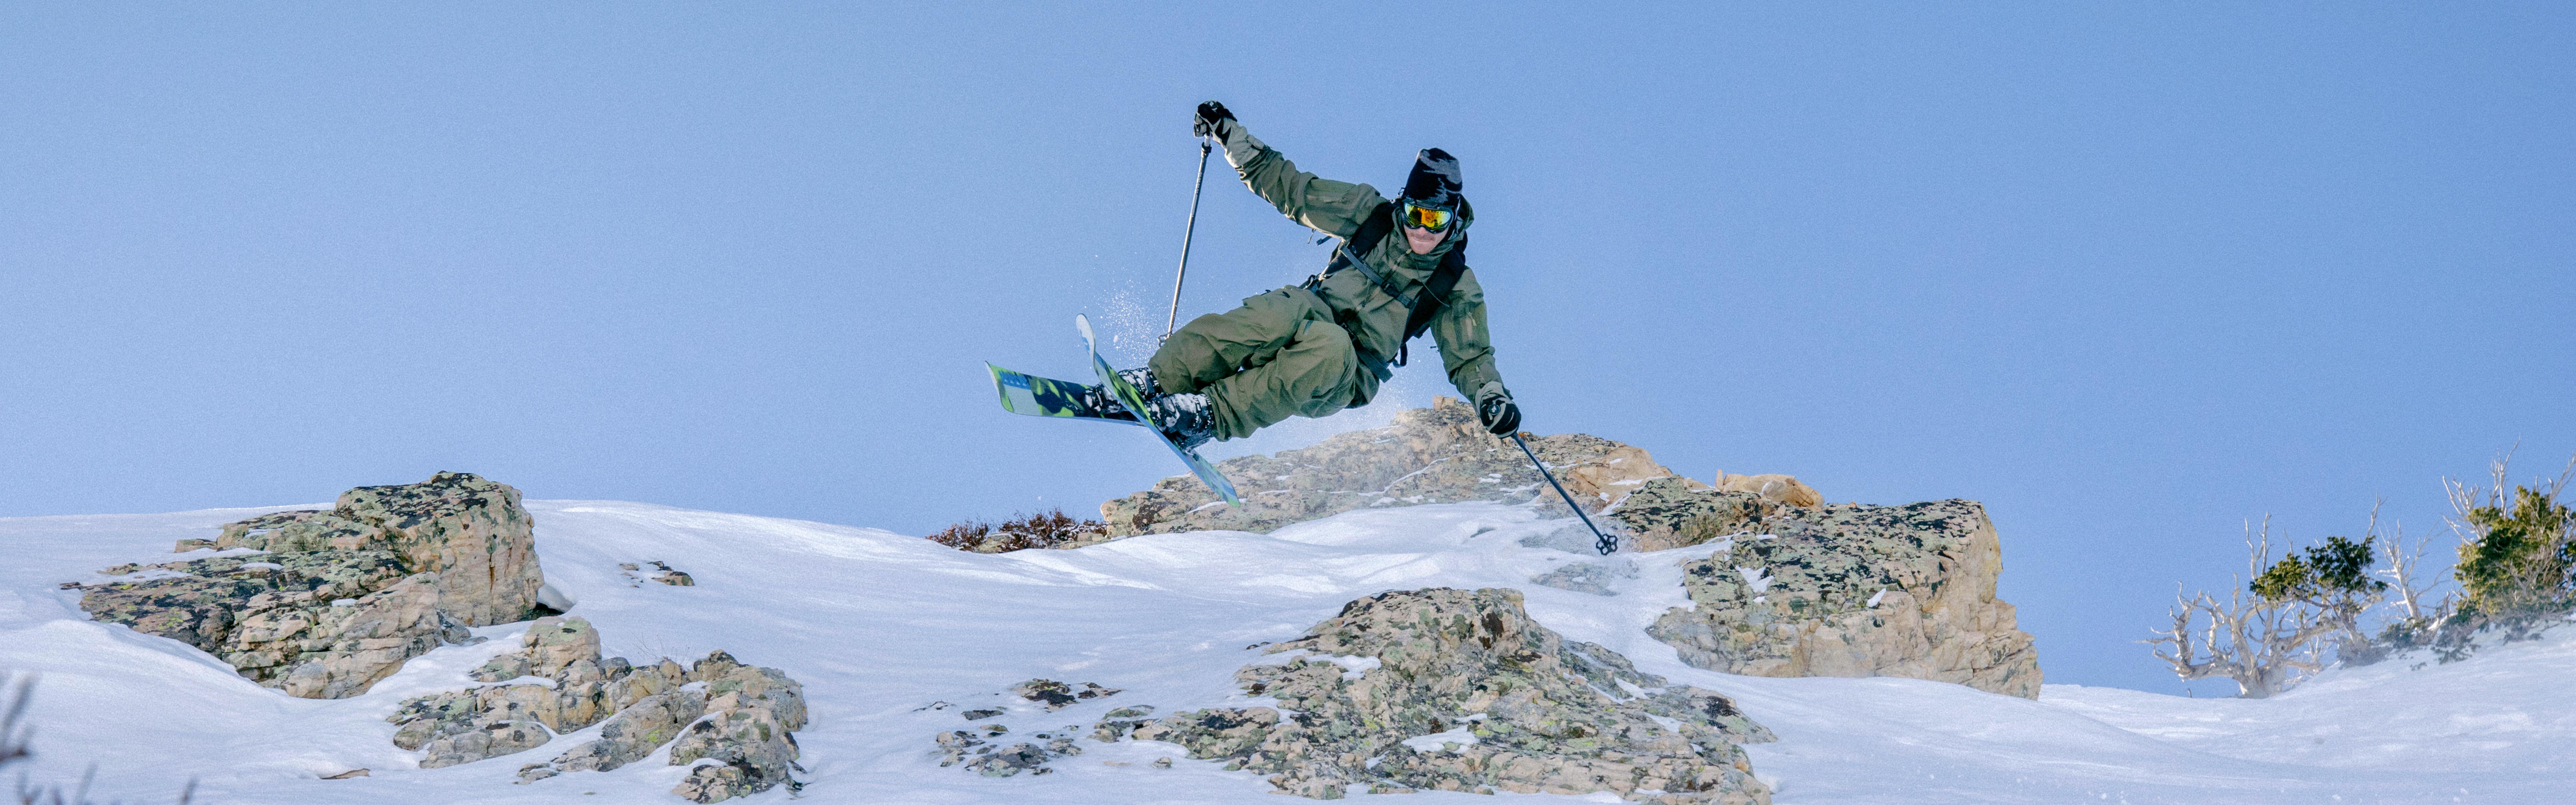 Sean Pettit jumps on 2022 Mindbender Ti skis.